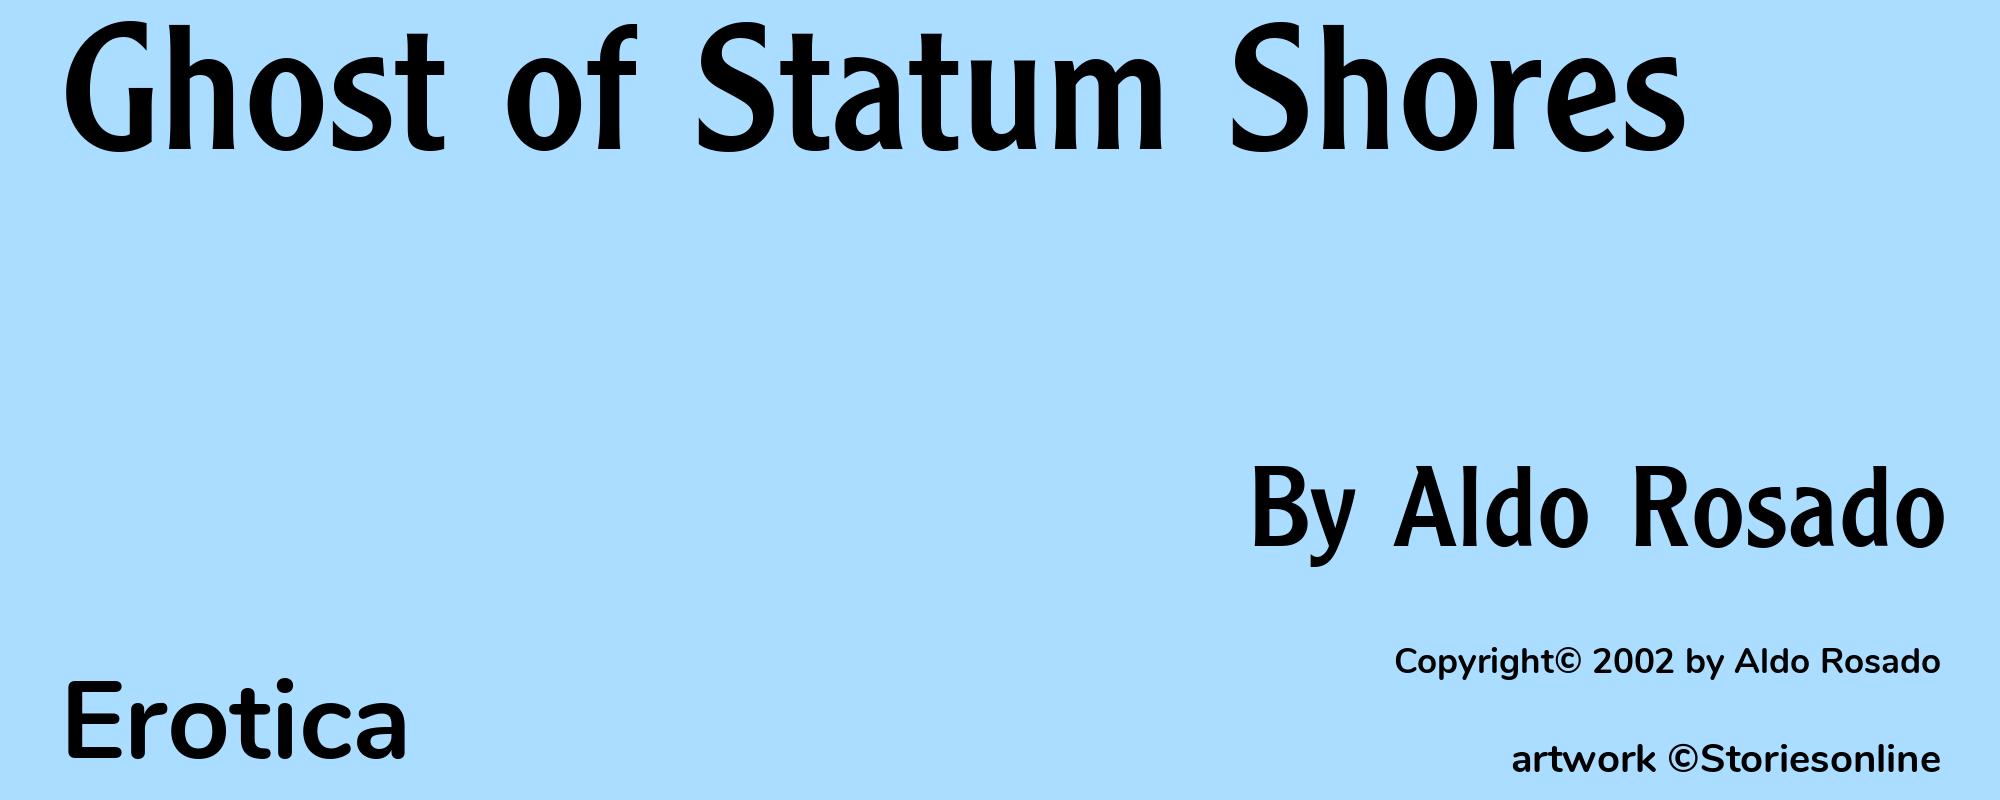 Ghost of Statum Shores - Cover